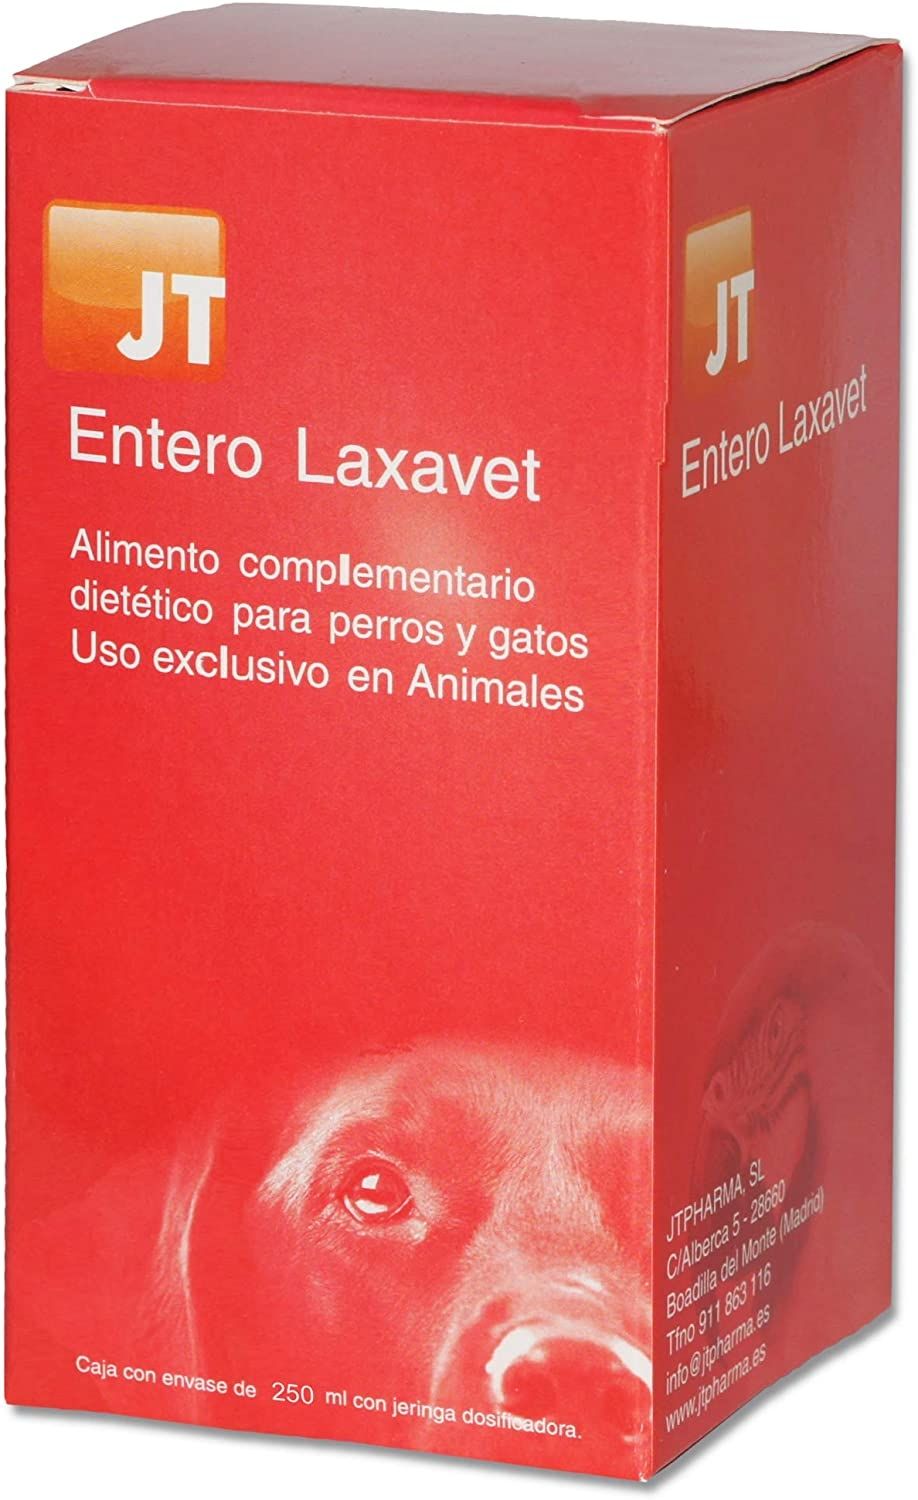 JT-Entero Laxavet, 55 ml